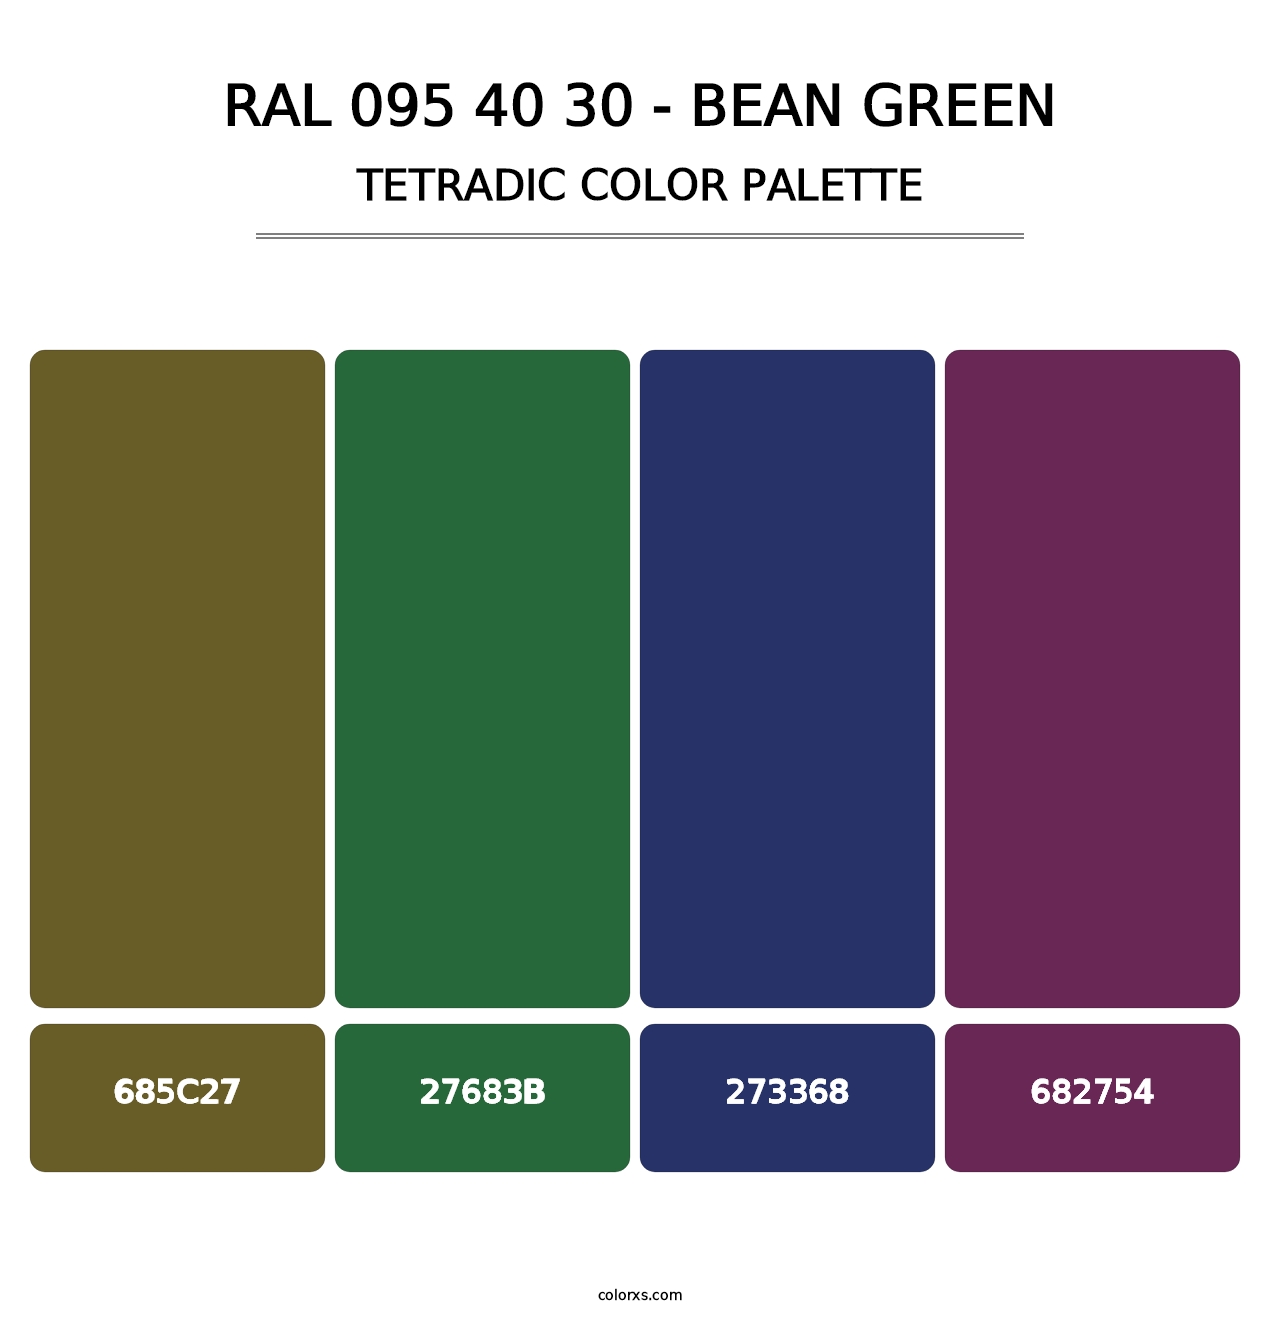 RAL 095 40 30 - Bean Green - Tetradic Color Palette